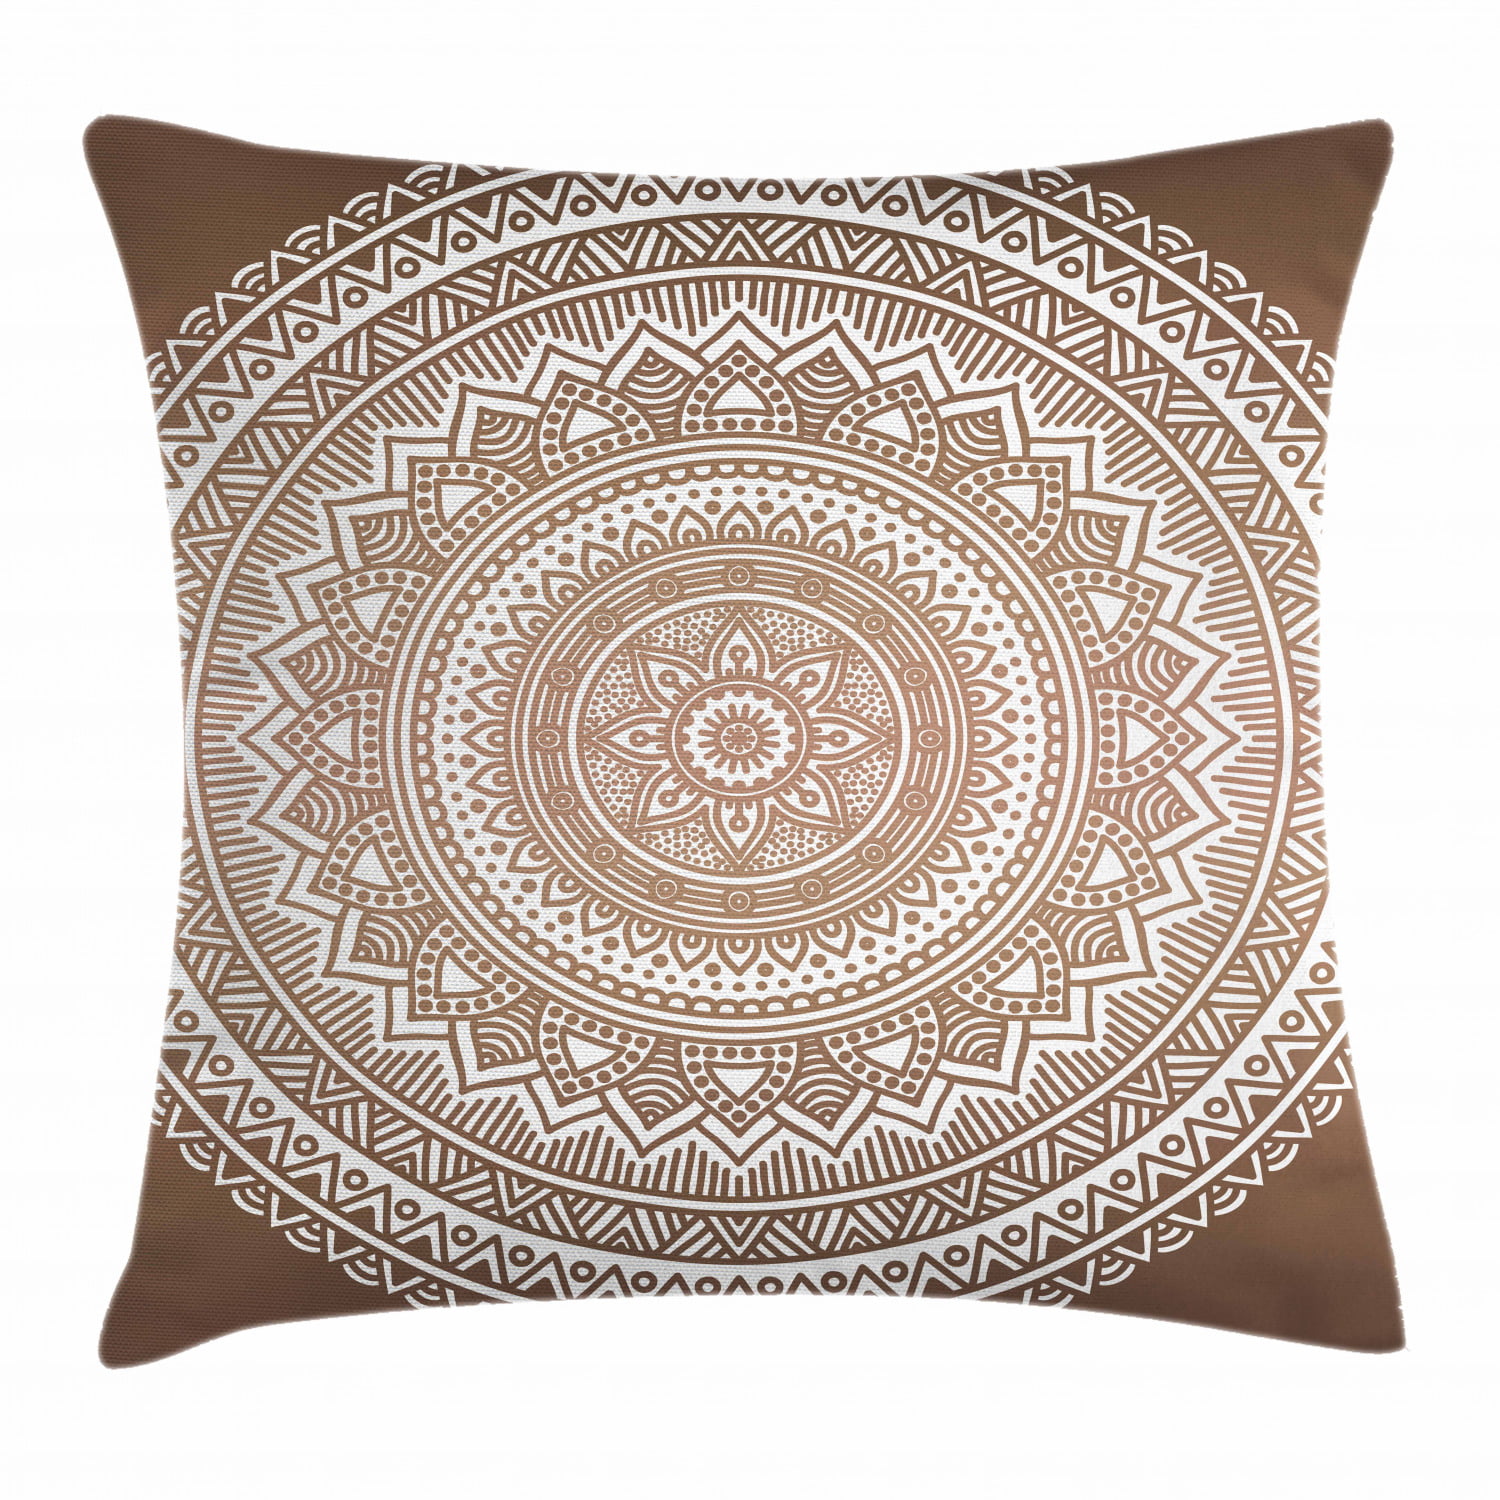 24" White Gold Indian Ombre Mandala Cushion Covers Sofa Decorative Pillows Case 